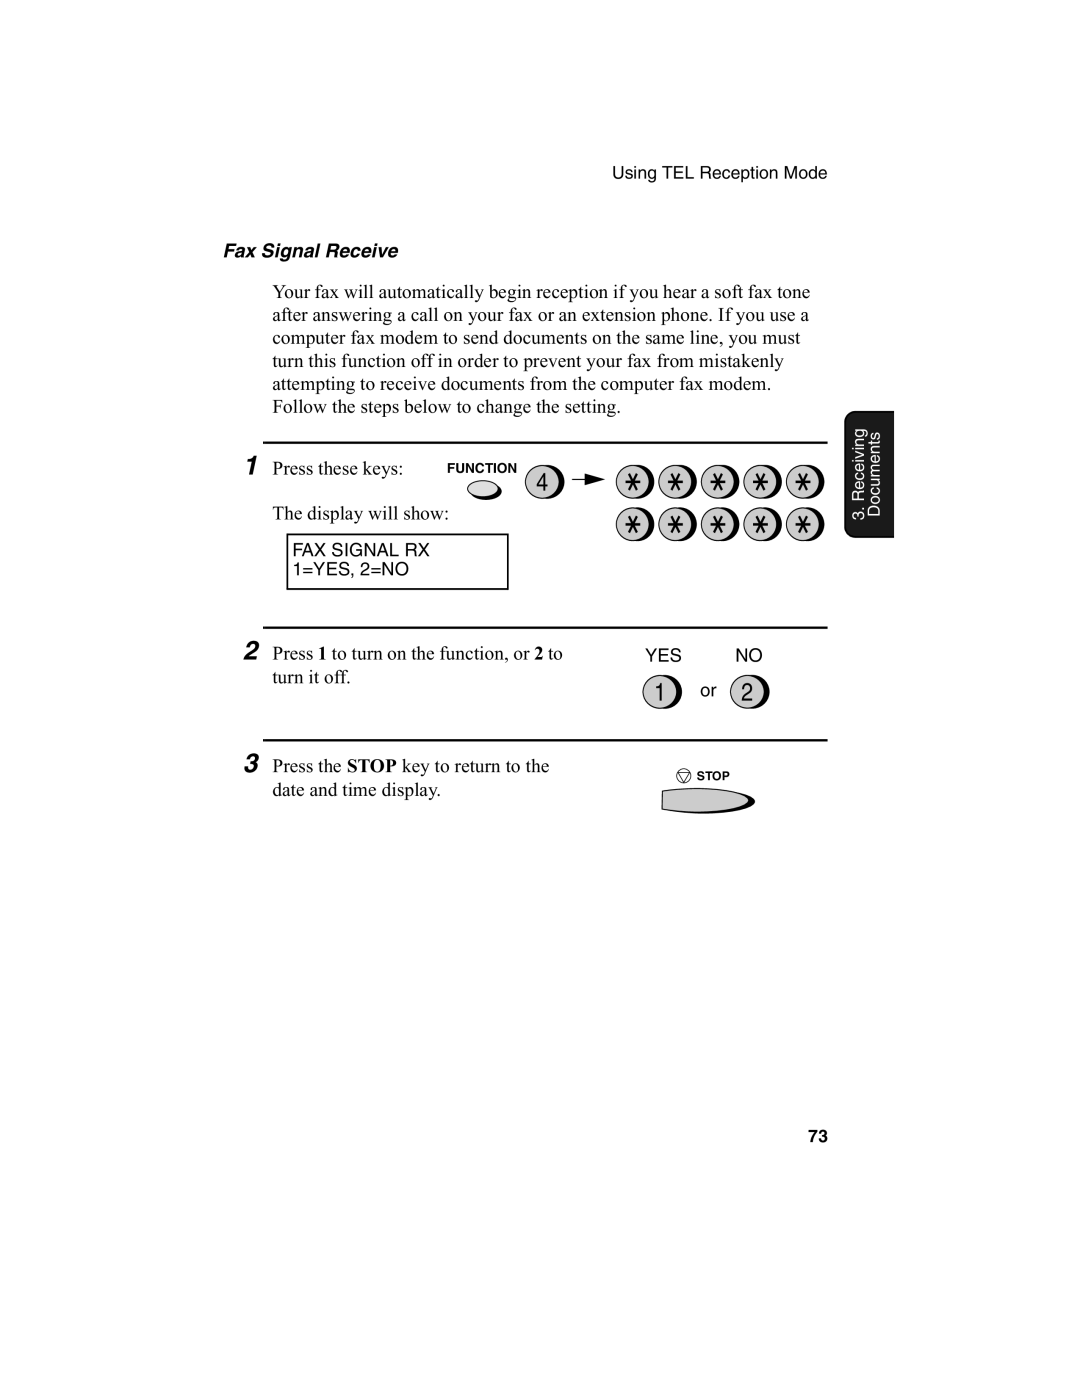 Sharp FO-2970M operation manual Fax Signal Receive 